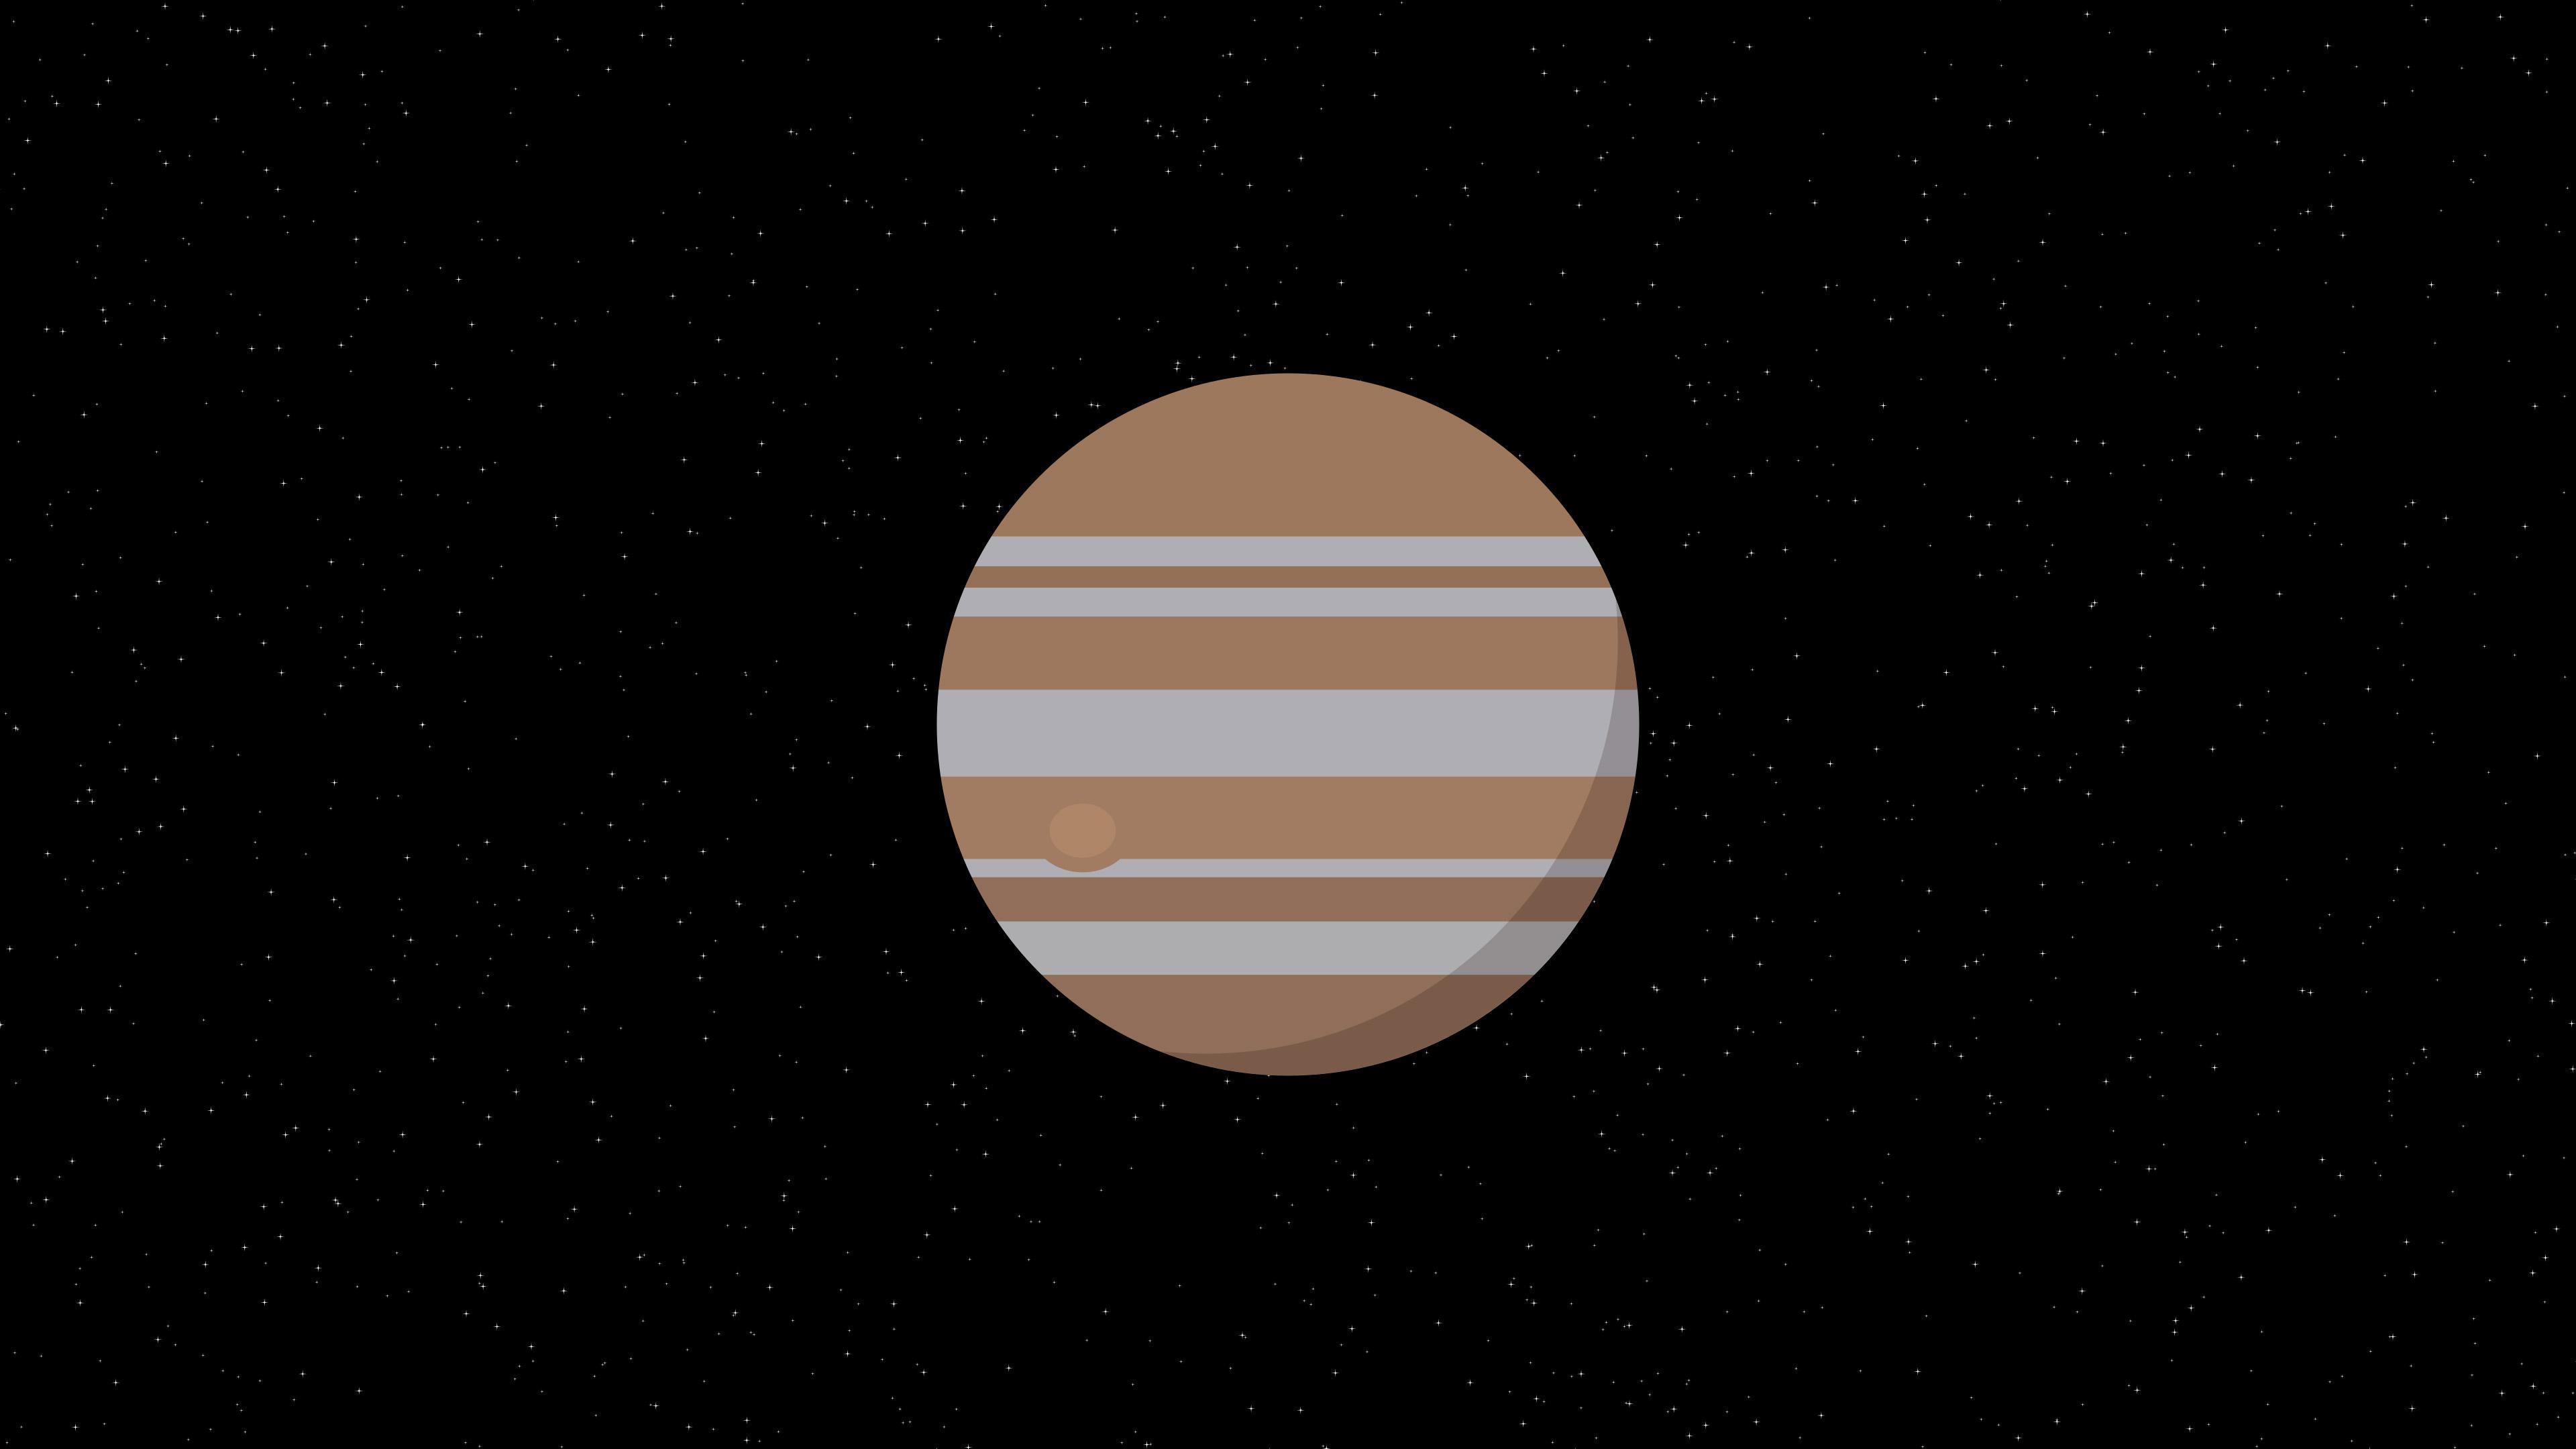 Jupiter Planet Minimalism 4k, HD Artist, 4k Wallpaper, Image